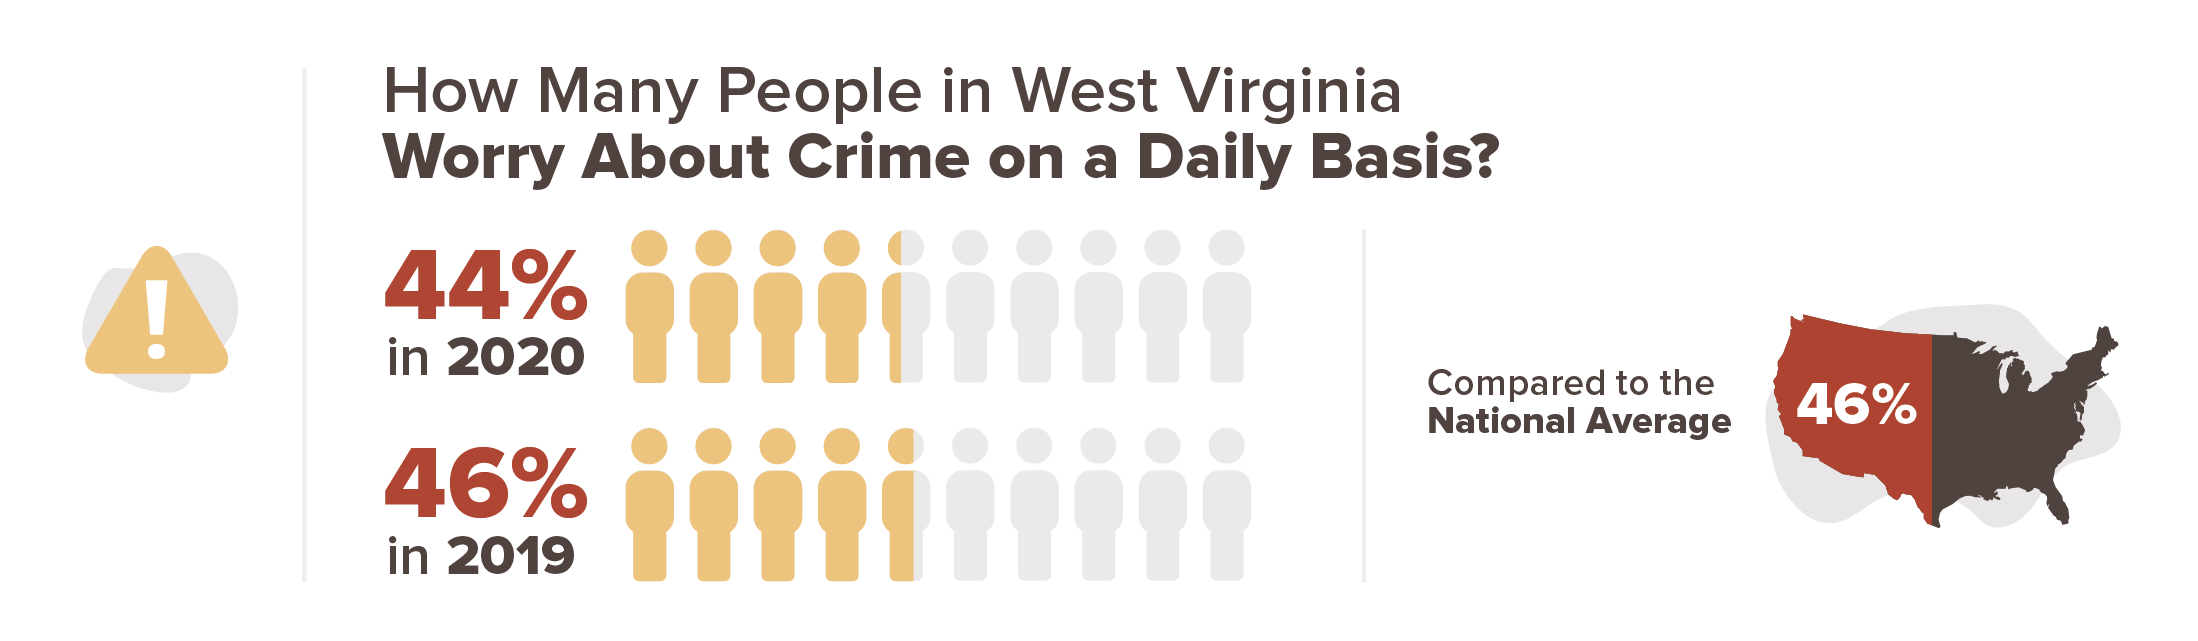 West Virginia crime concern infographic